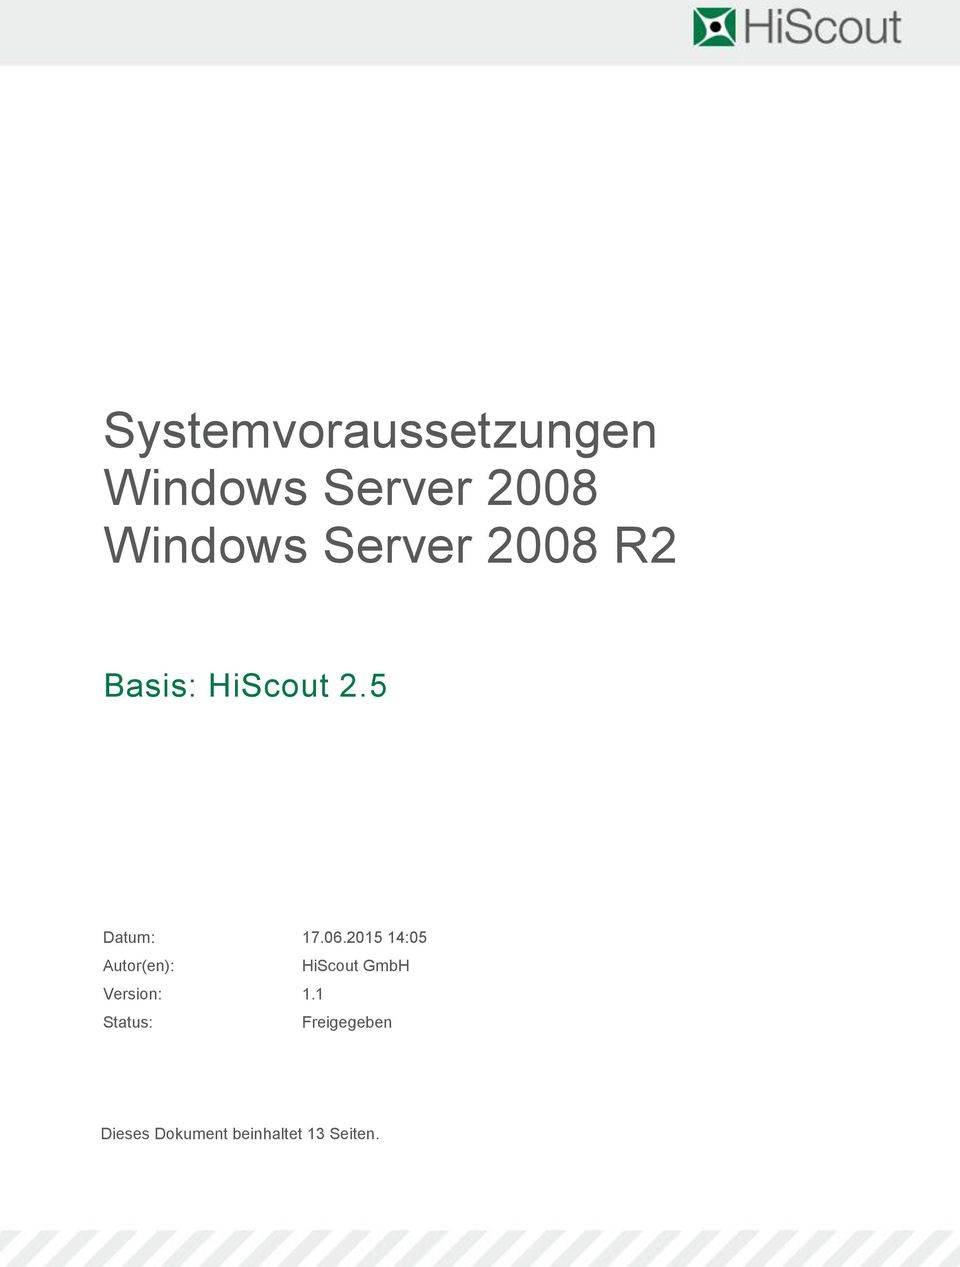 2015 14:05 Autor(en): HiScout GmbH Version: 1.